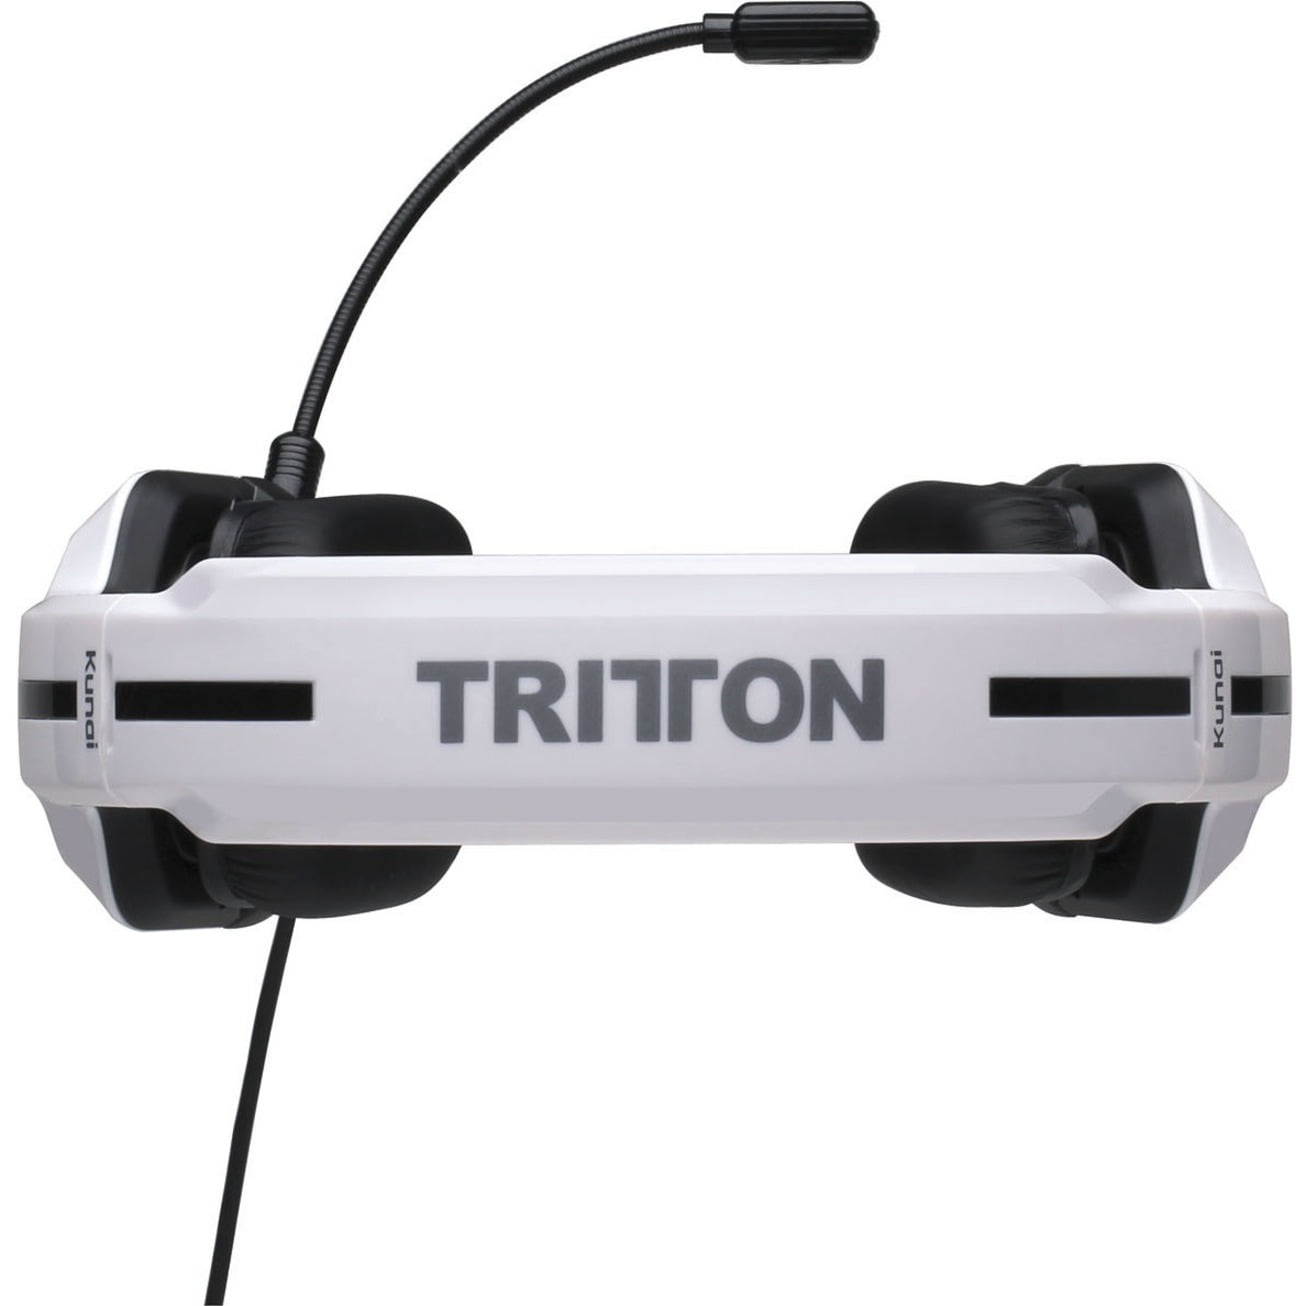 Tritton Kunai Stereo for Xbox PS4, PS3, Wii U, PC/Mac & Mobile - Walmart.com